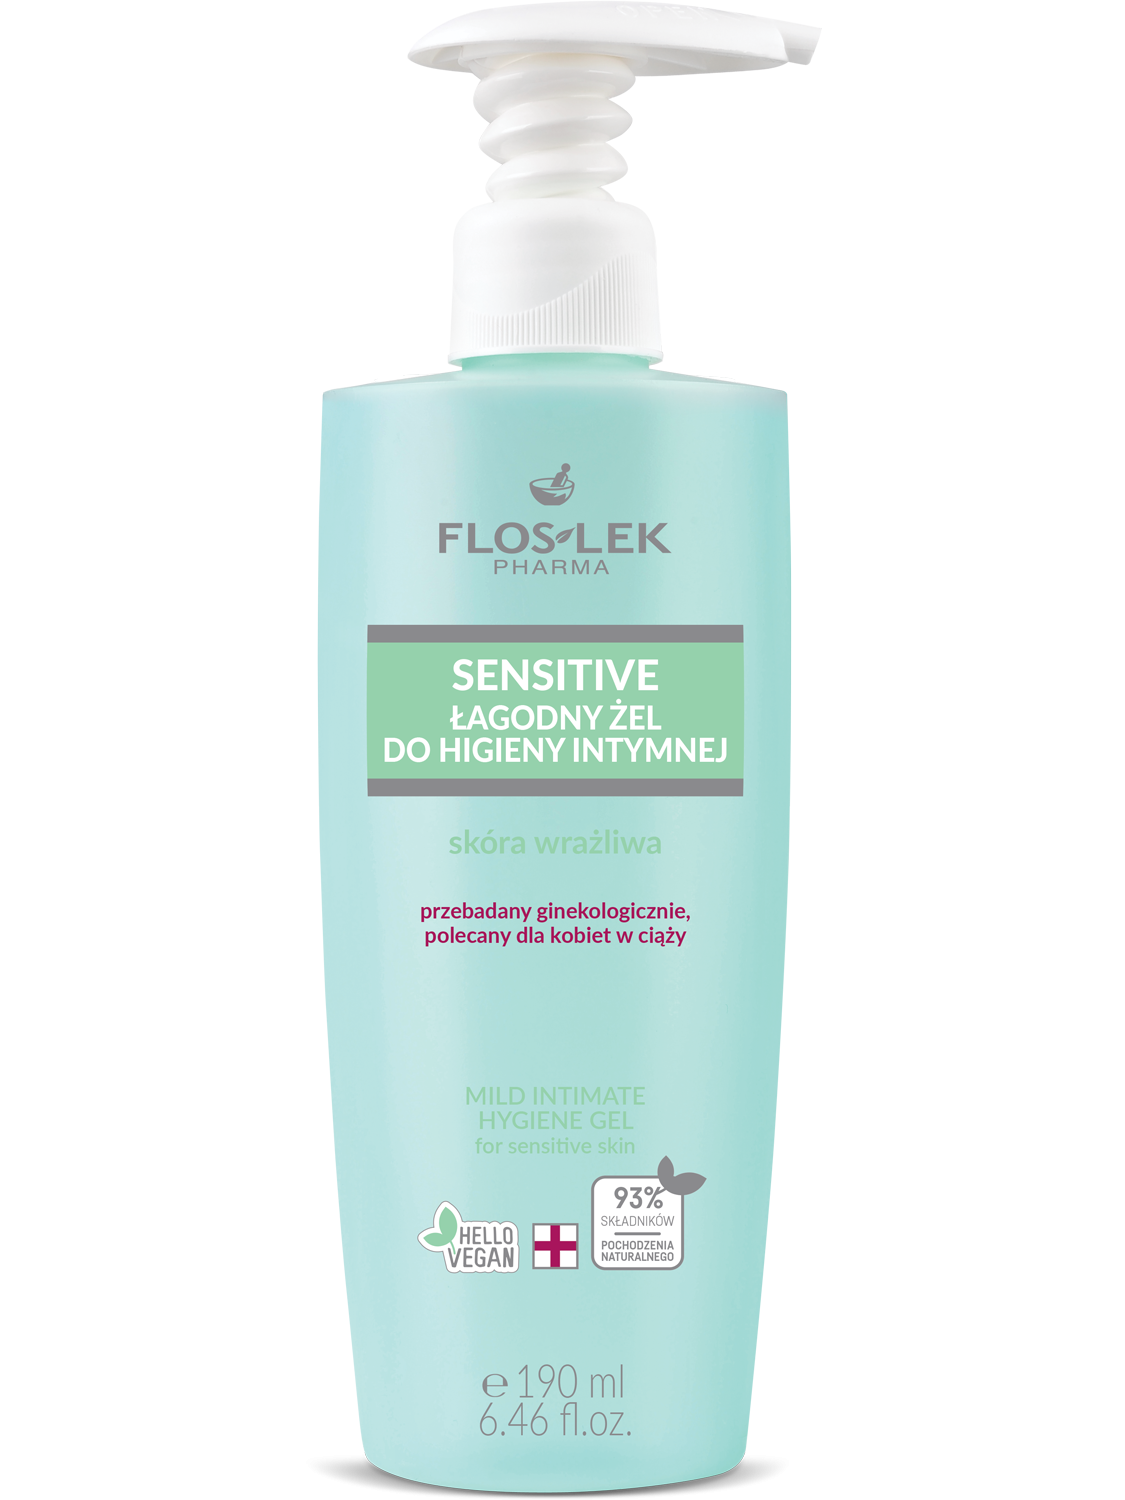 Mild intimate hygiene gel for sensitive skin - 200 ml - Floslek